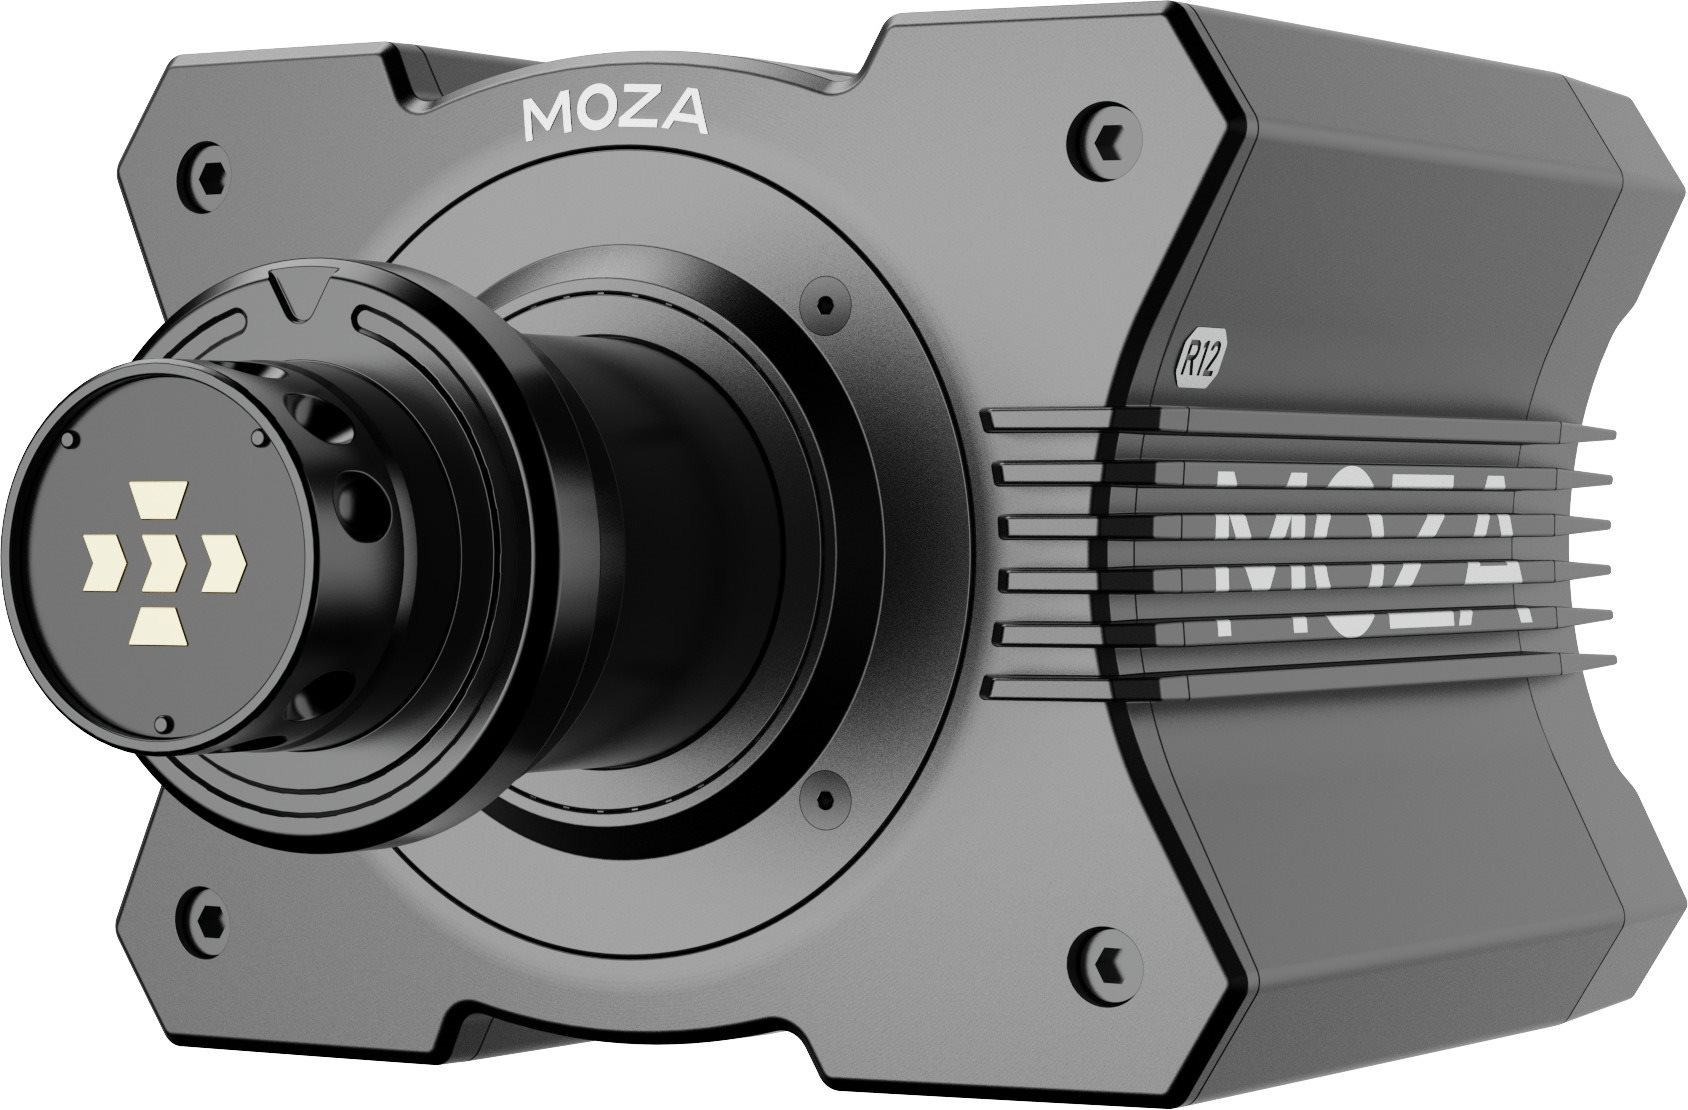 MOZA R12 Direct Drive Wheelbase kontroller